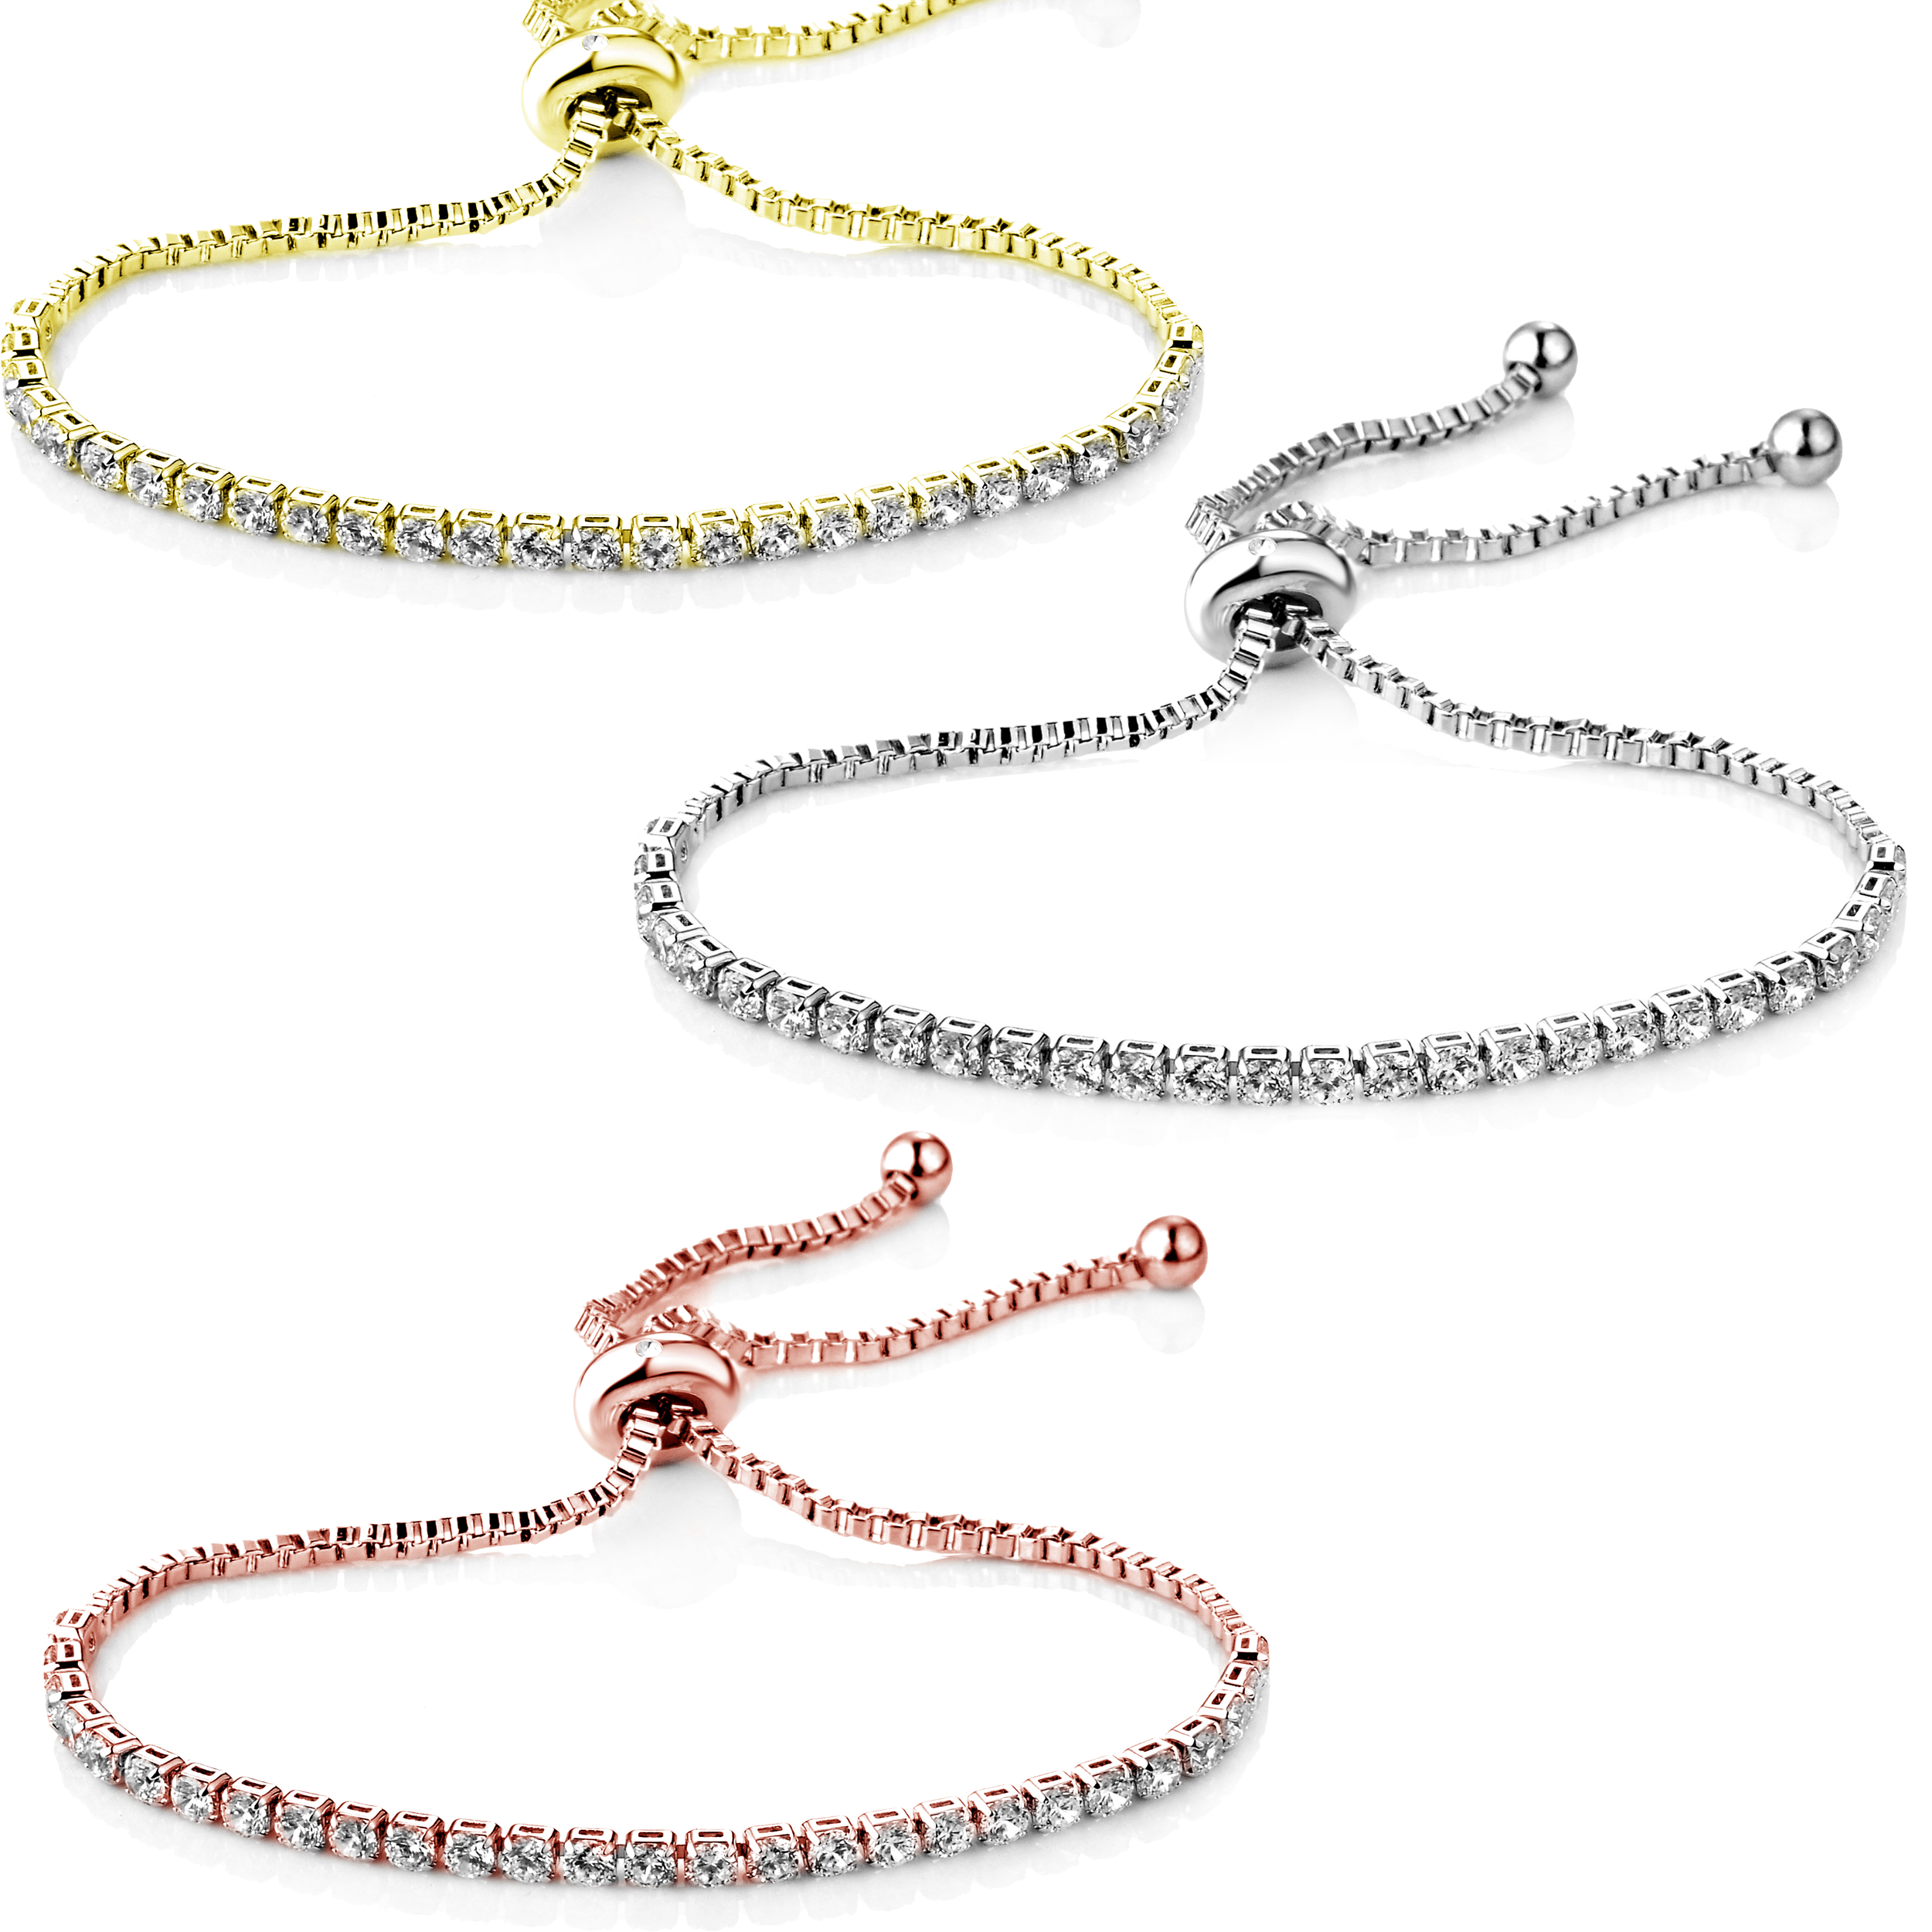 Solitaire Friendship Bracelet Created with Zircondia® Crystals by Philip Jones Jewellery